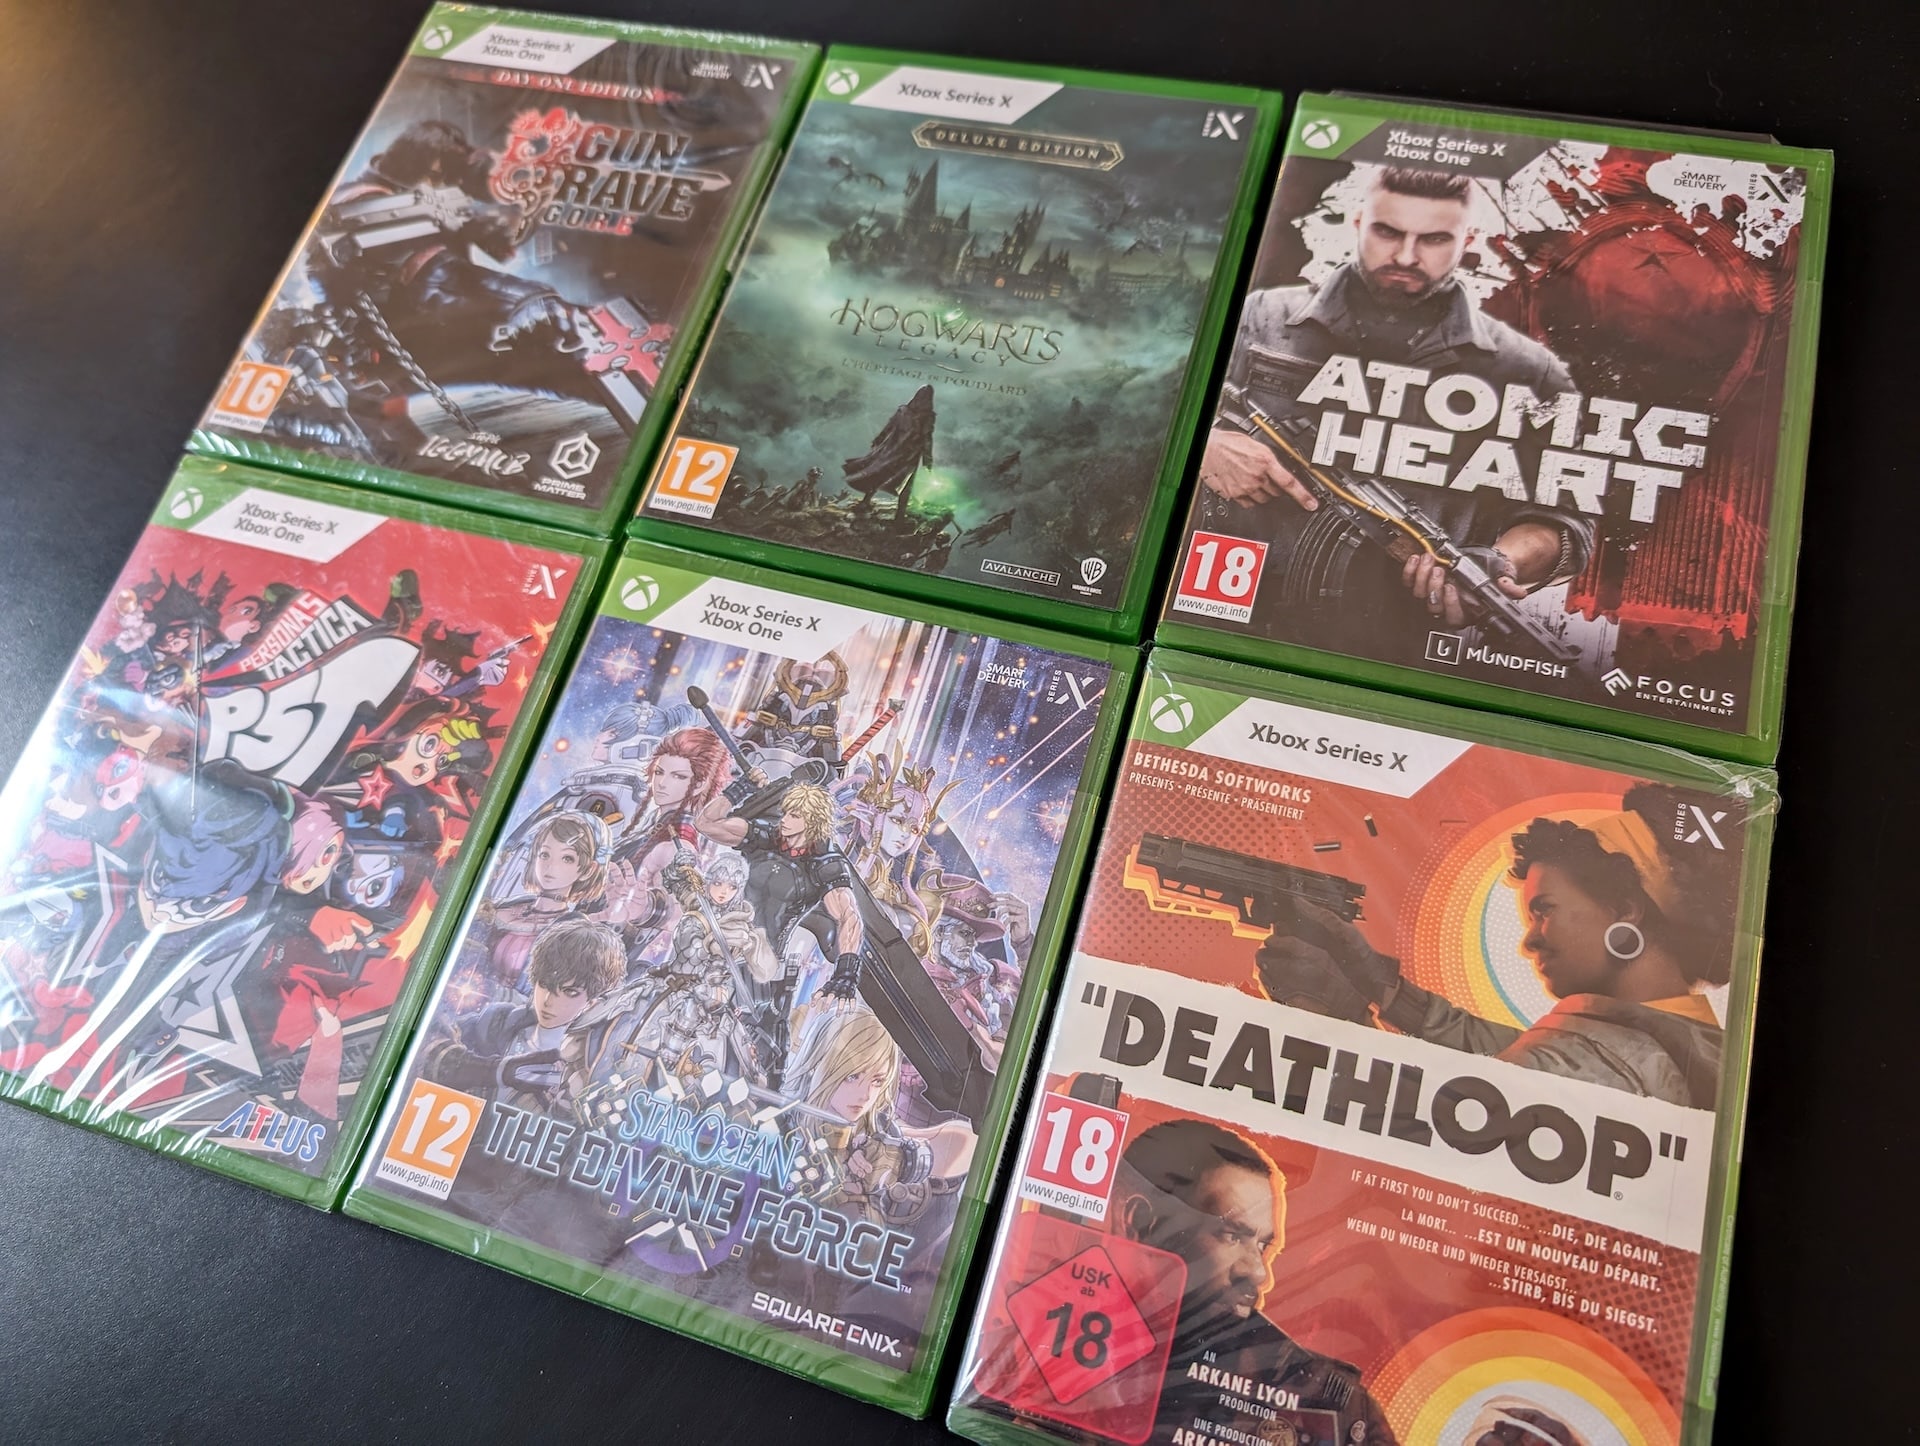 Jeux Xbox Series X